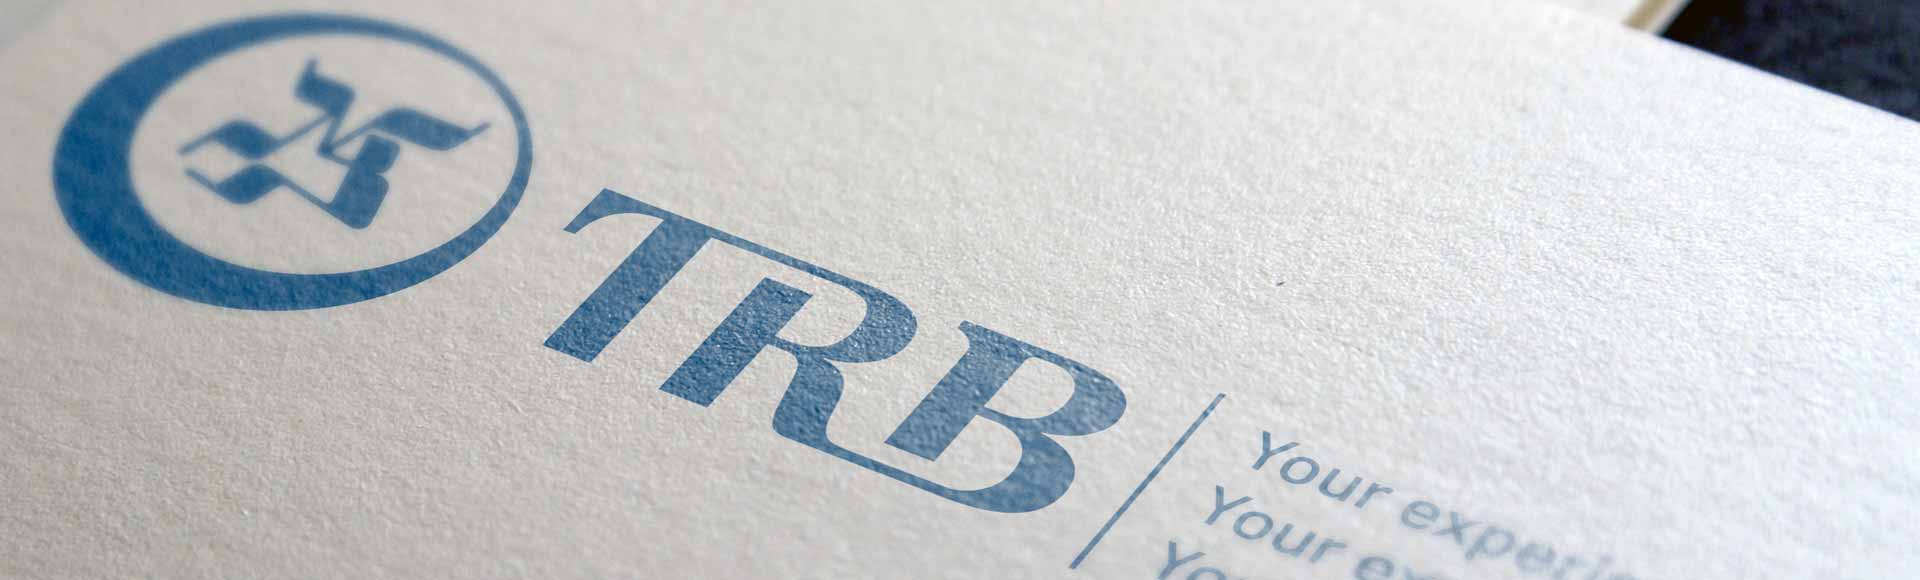 TRB-new-logo-header-banner-1920x580